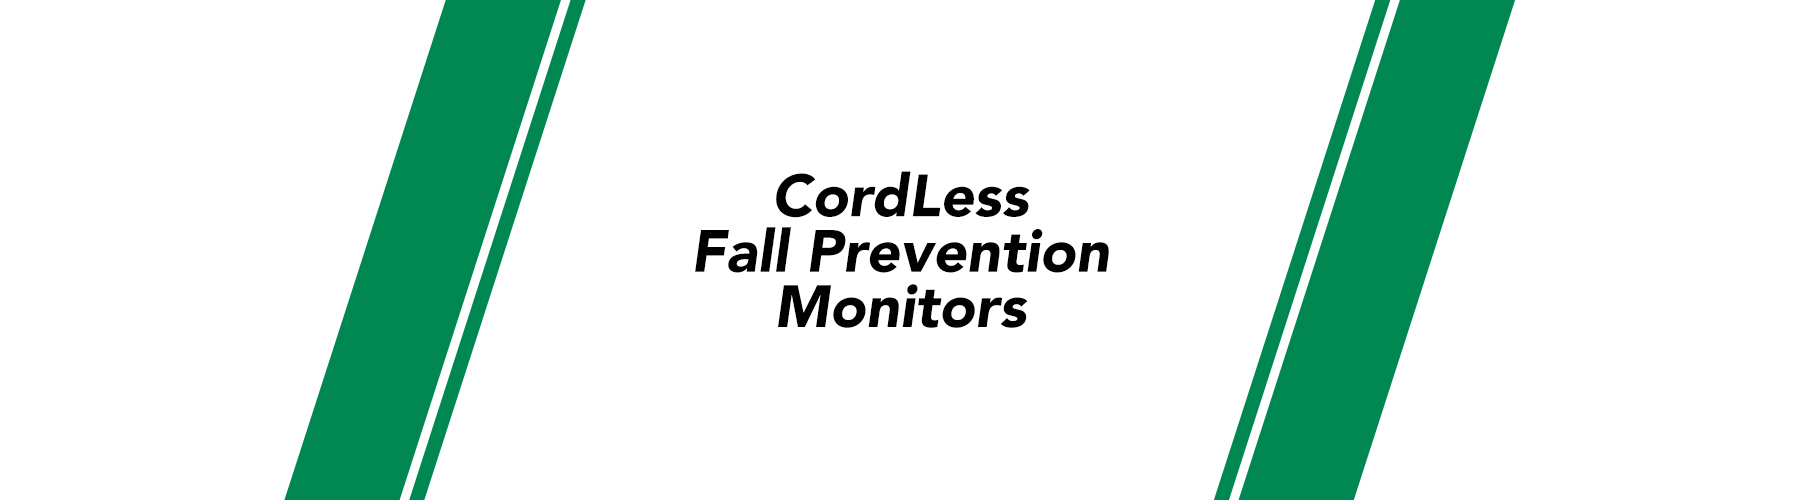 Fall Prevention Statistics